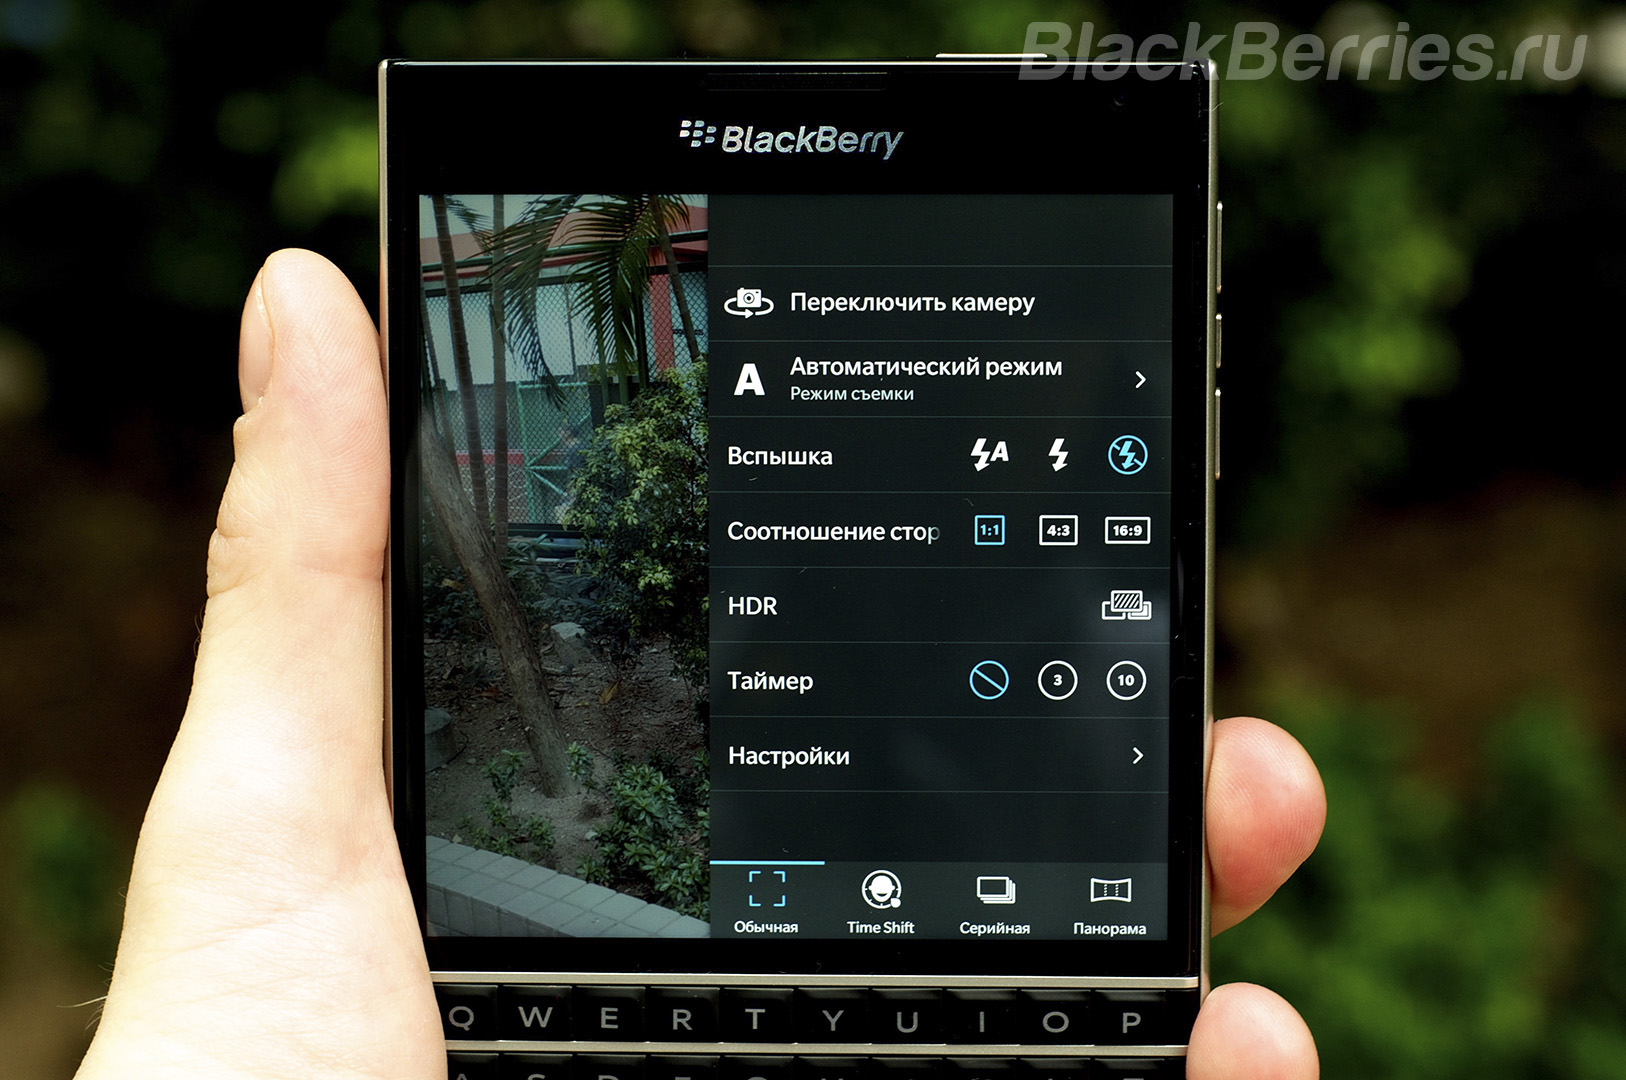 BlackBerry-Passport-Review-2014-20